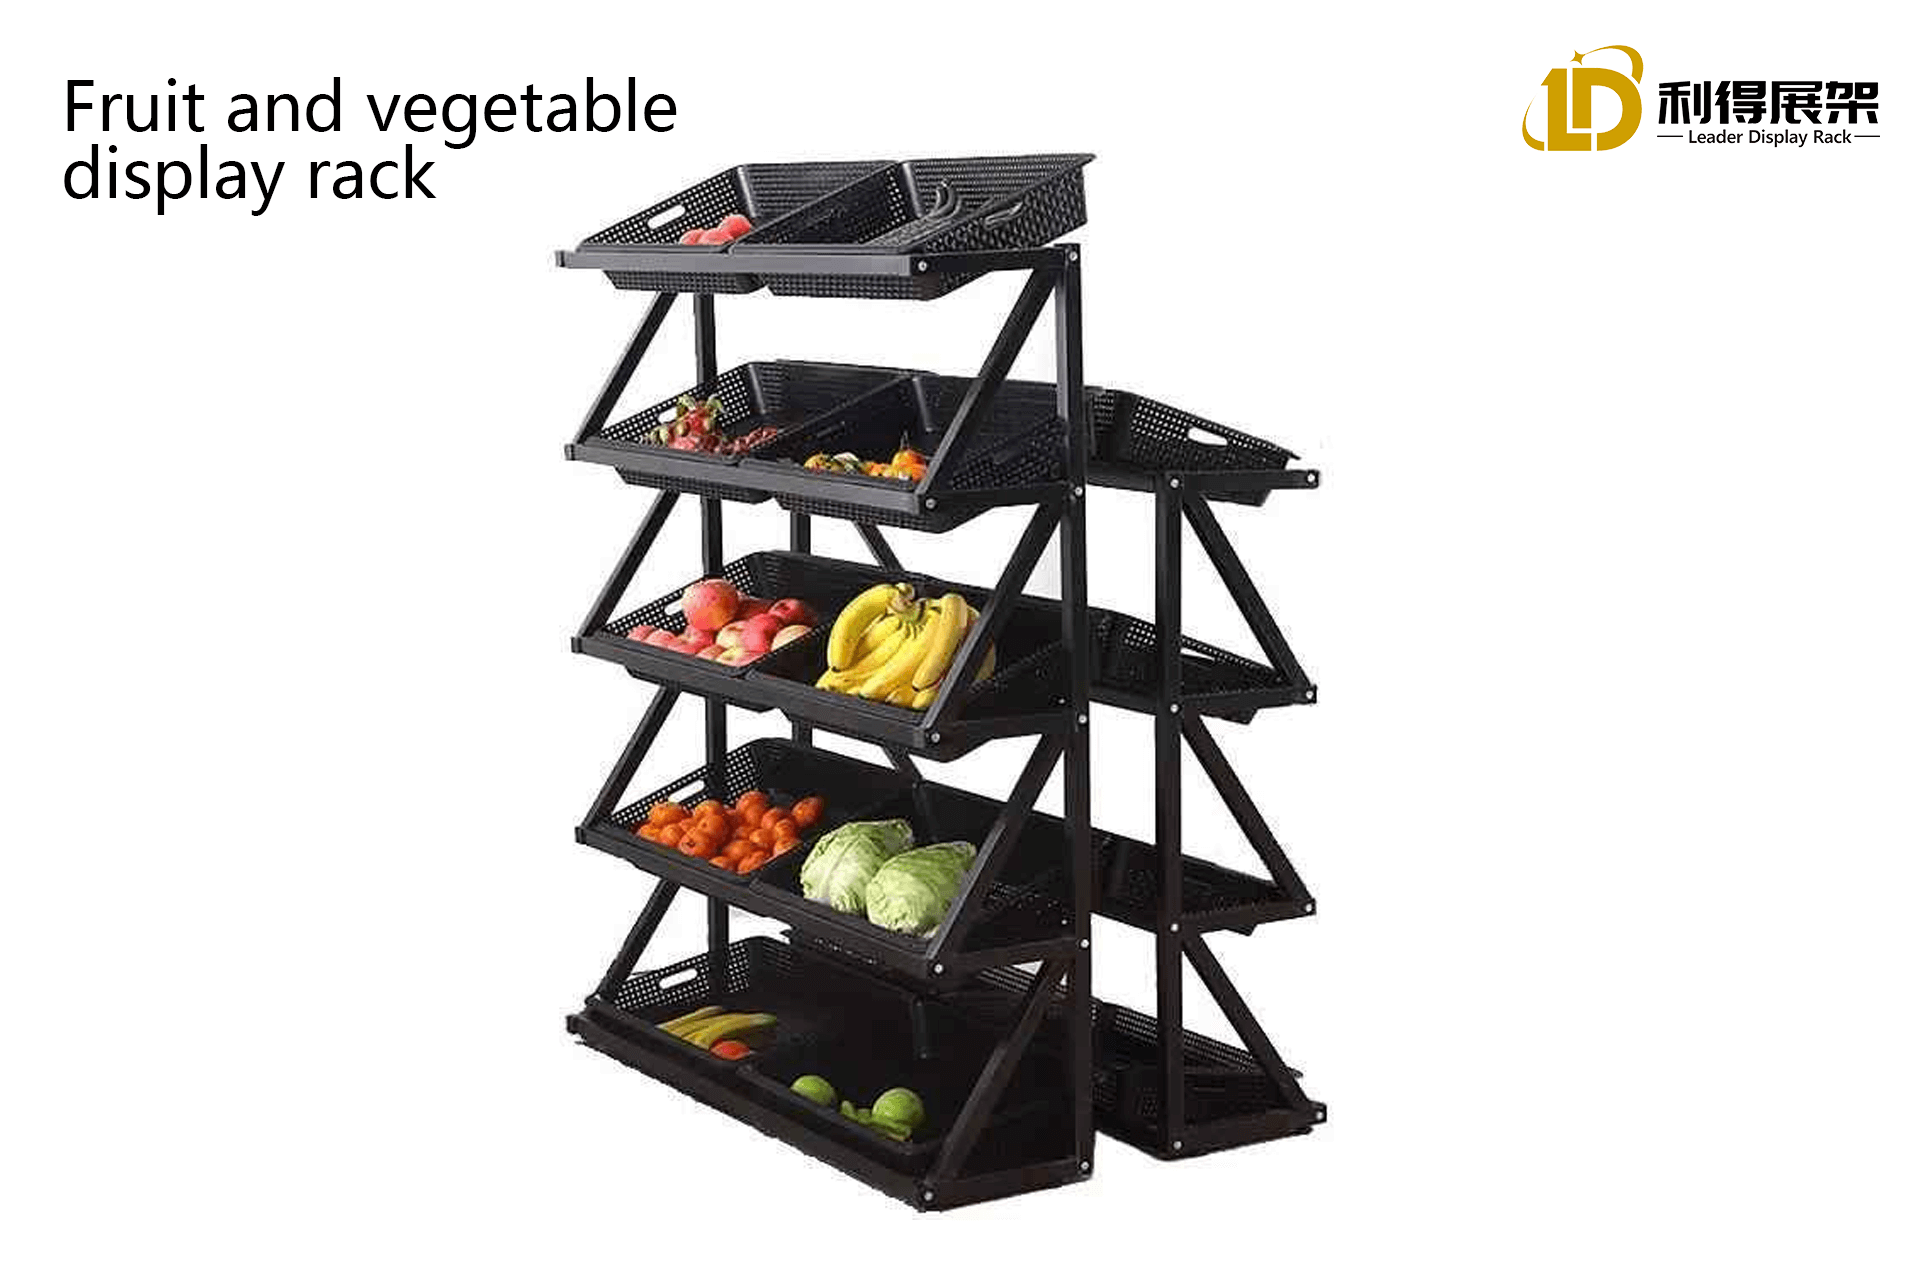 Fruit and vegetable display rack